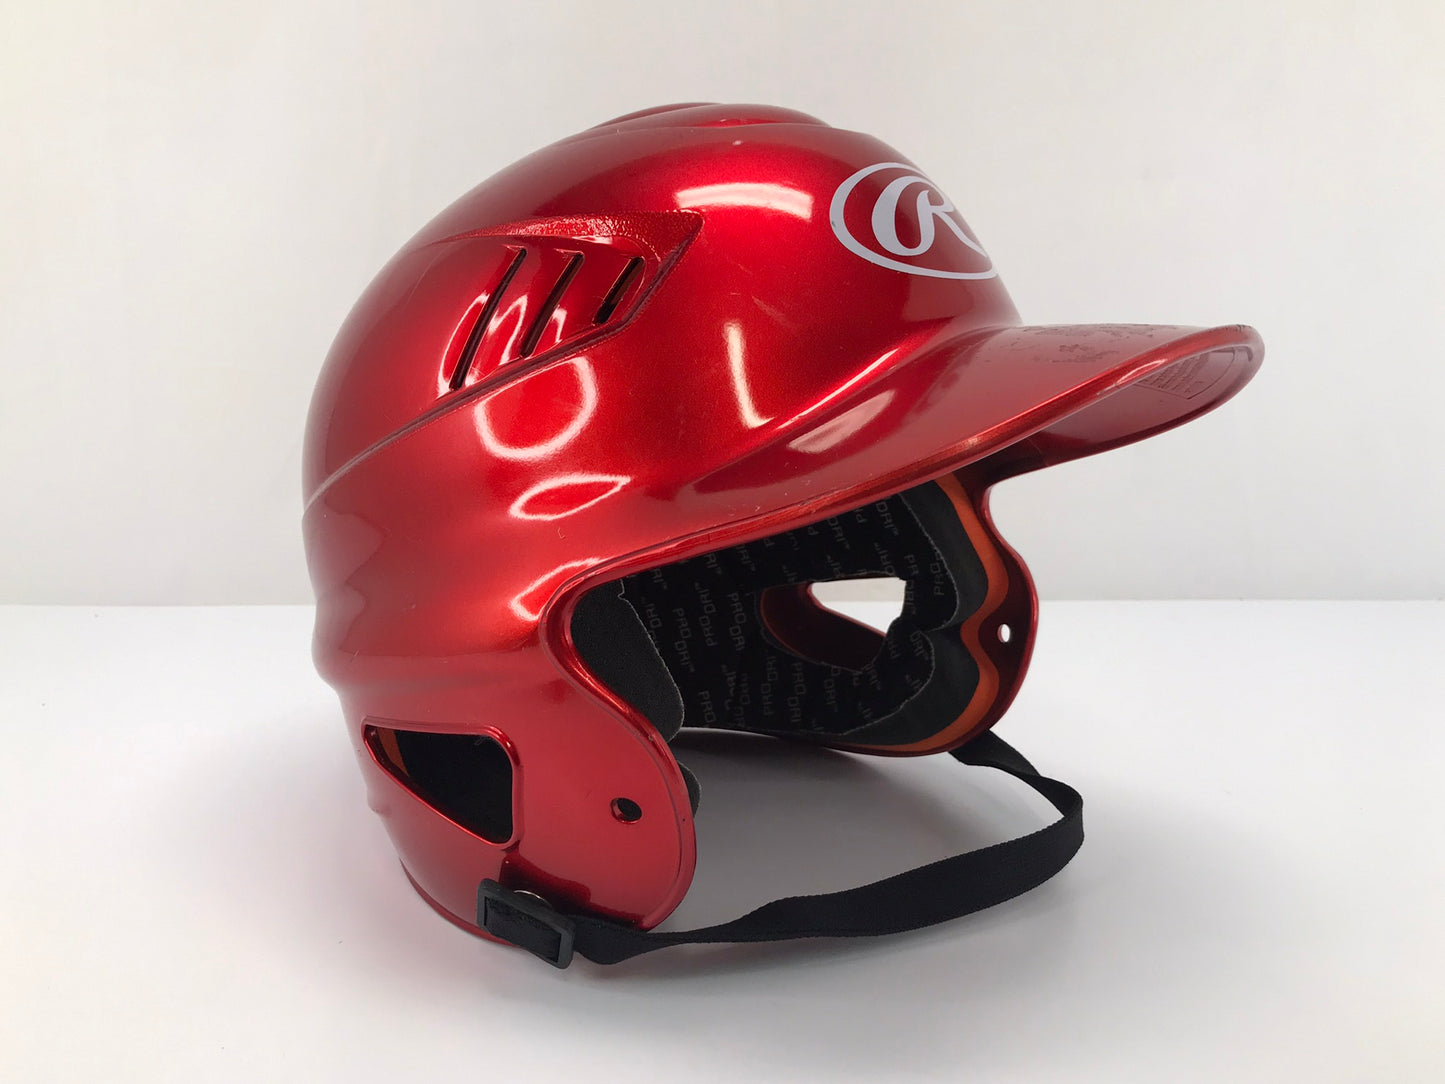 Baseball Helmet Child Size 6.25-7.5 Junior Rawlings Brilliant Red As New